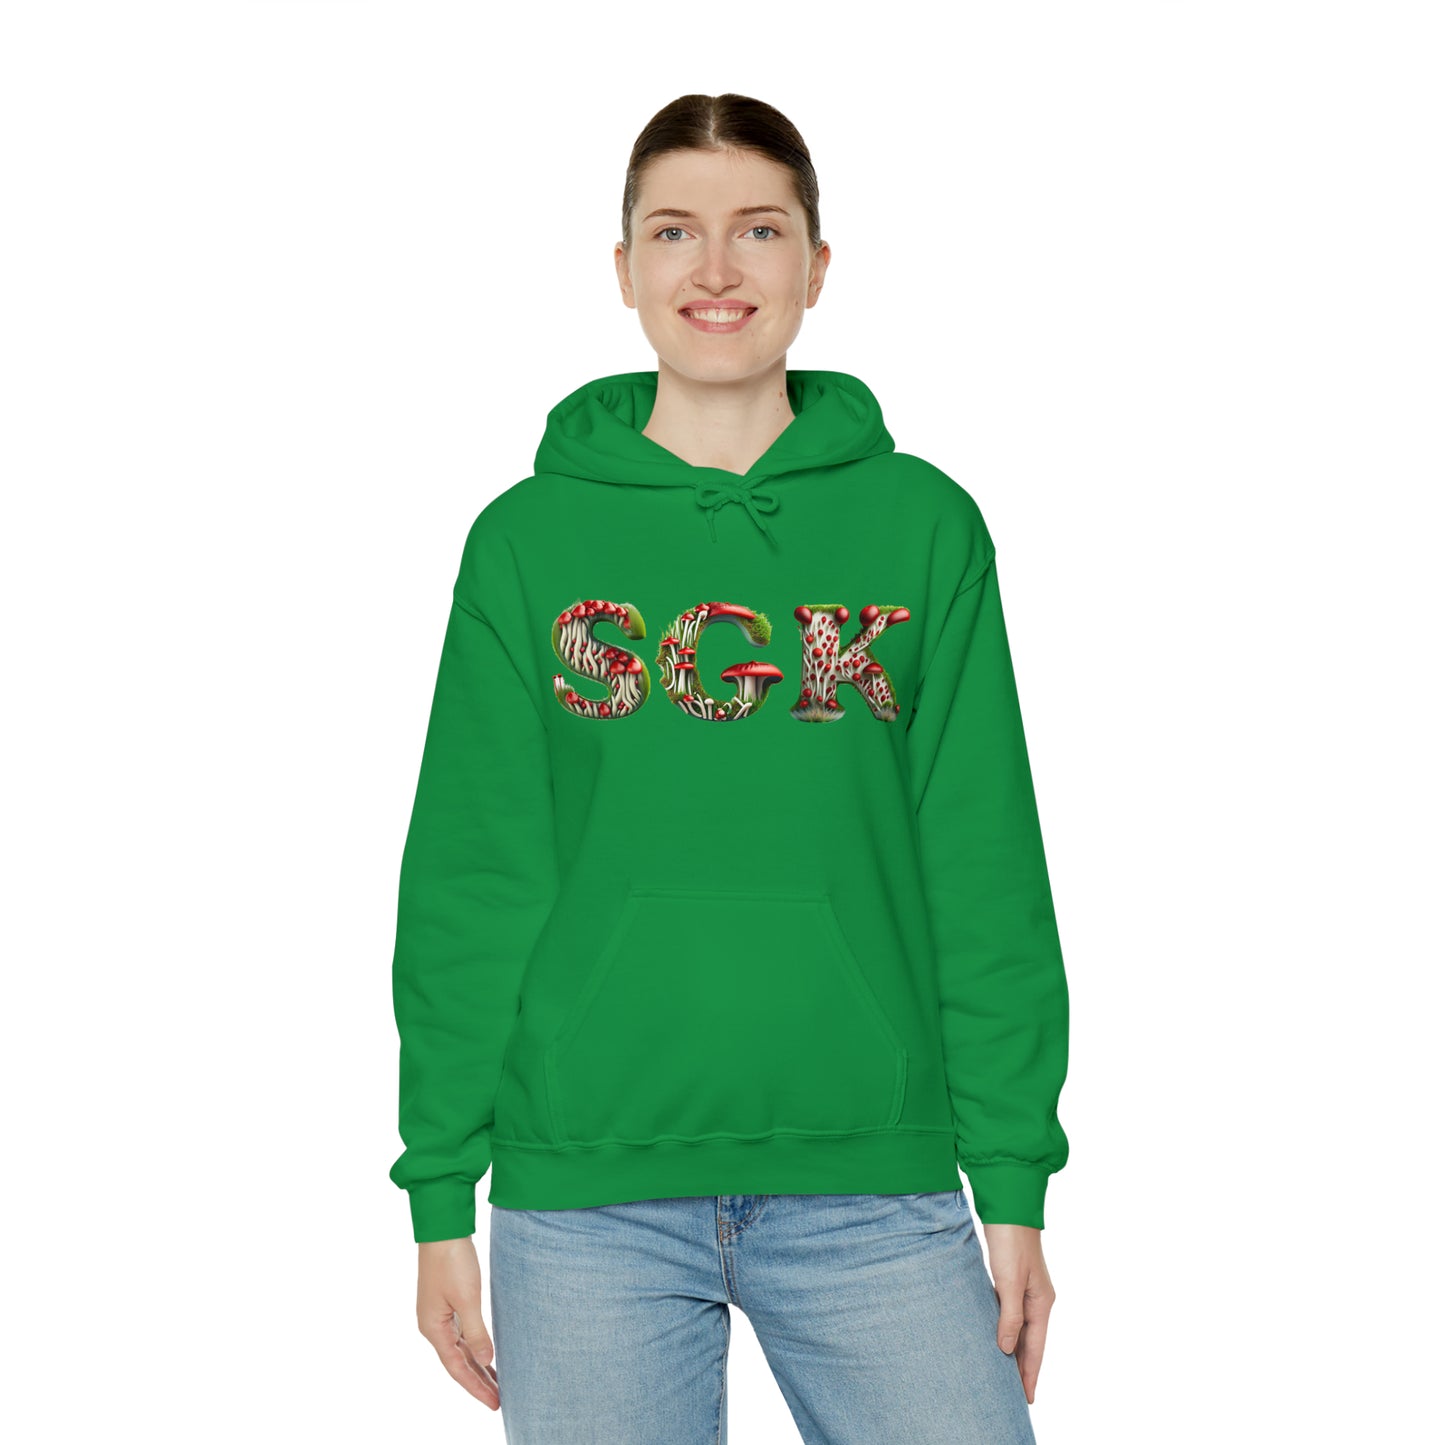 SGK Mushroom Unisex Heavy Blend™ Hooded Sweatshirt